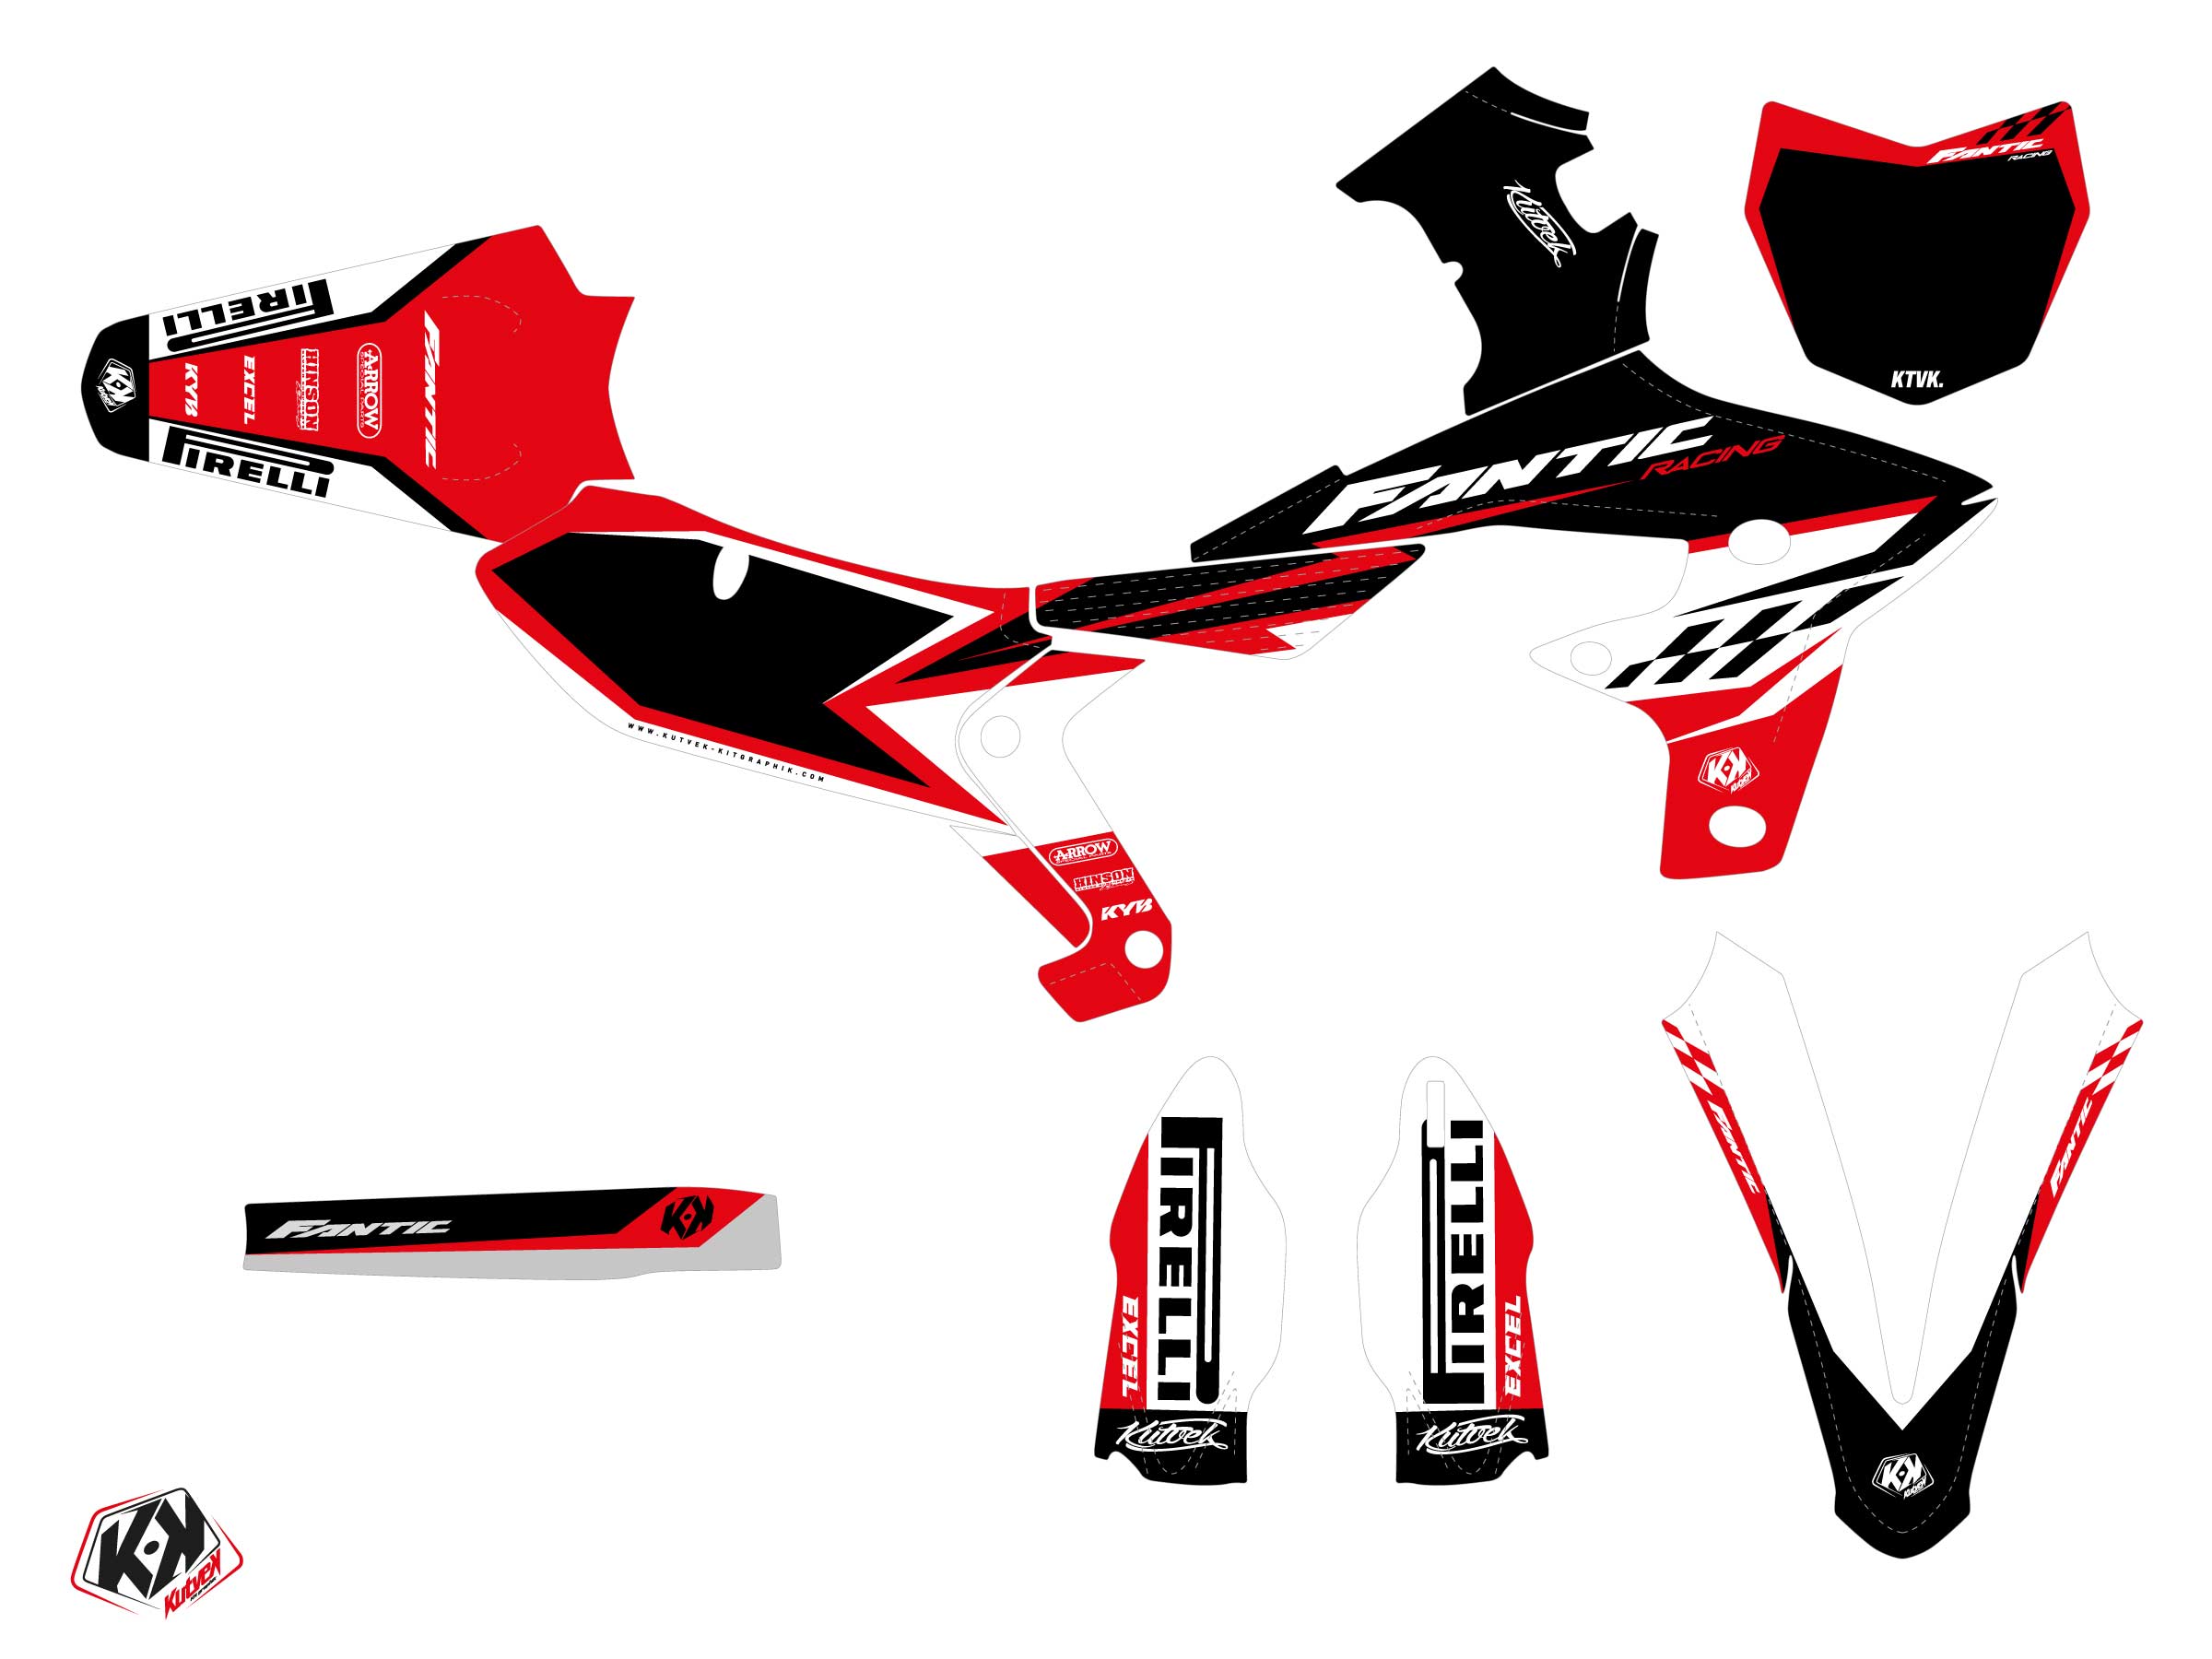 Fantic Xx 250 F Dirt Bike Inkline Graphic Kit Red